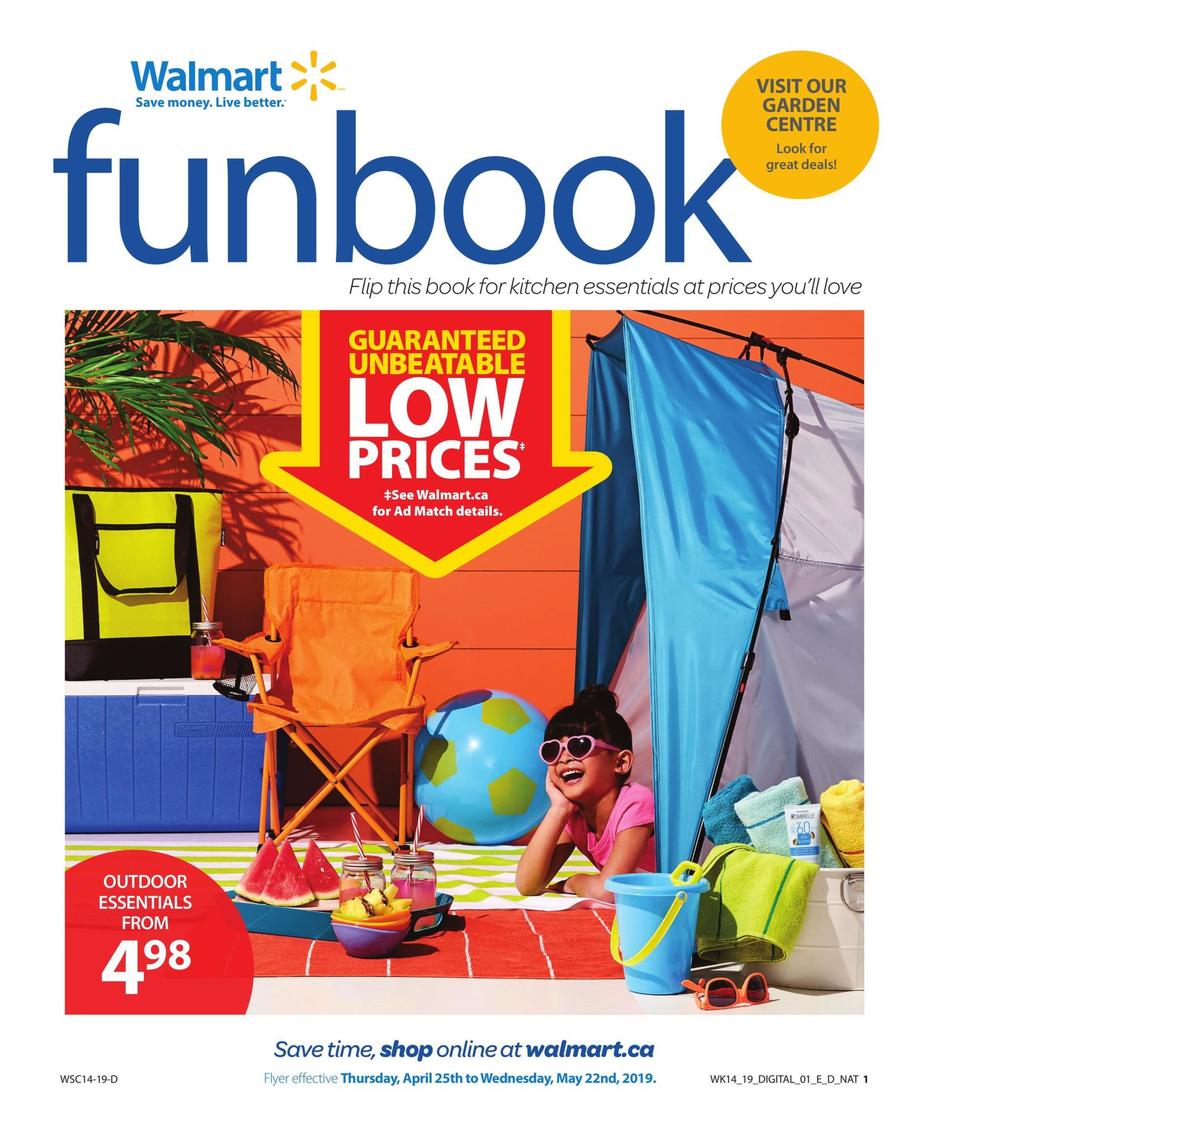 Walmart Fun Book Flyer from April 25